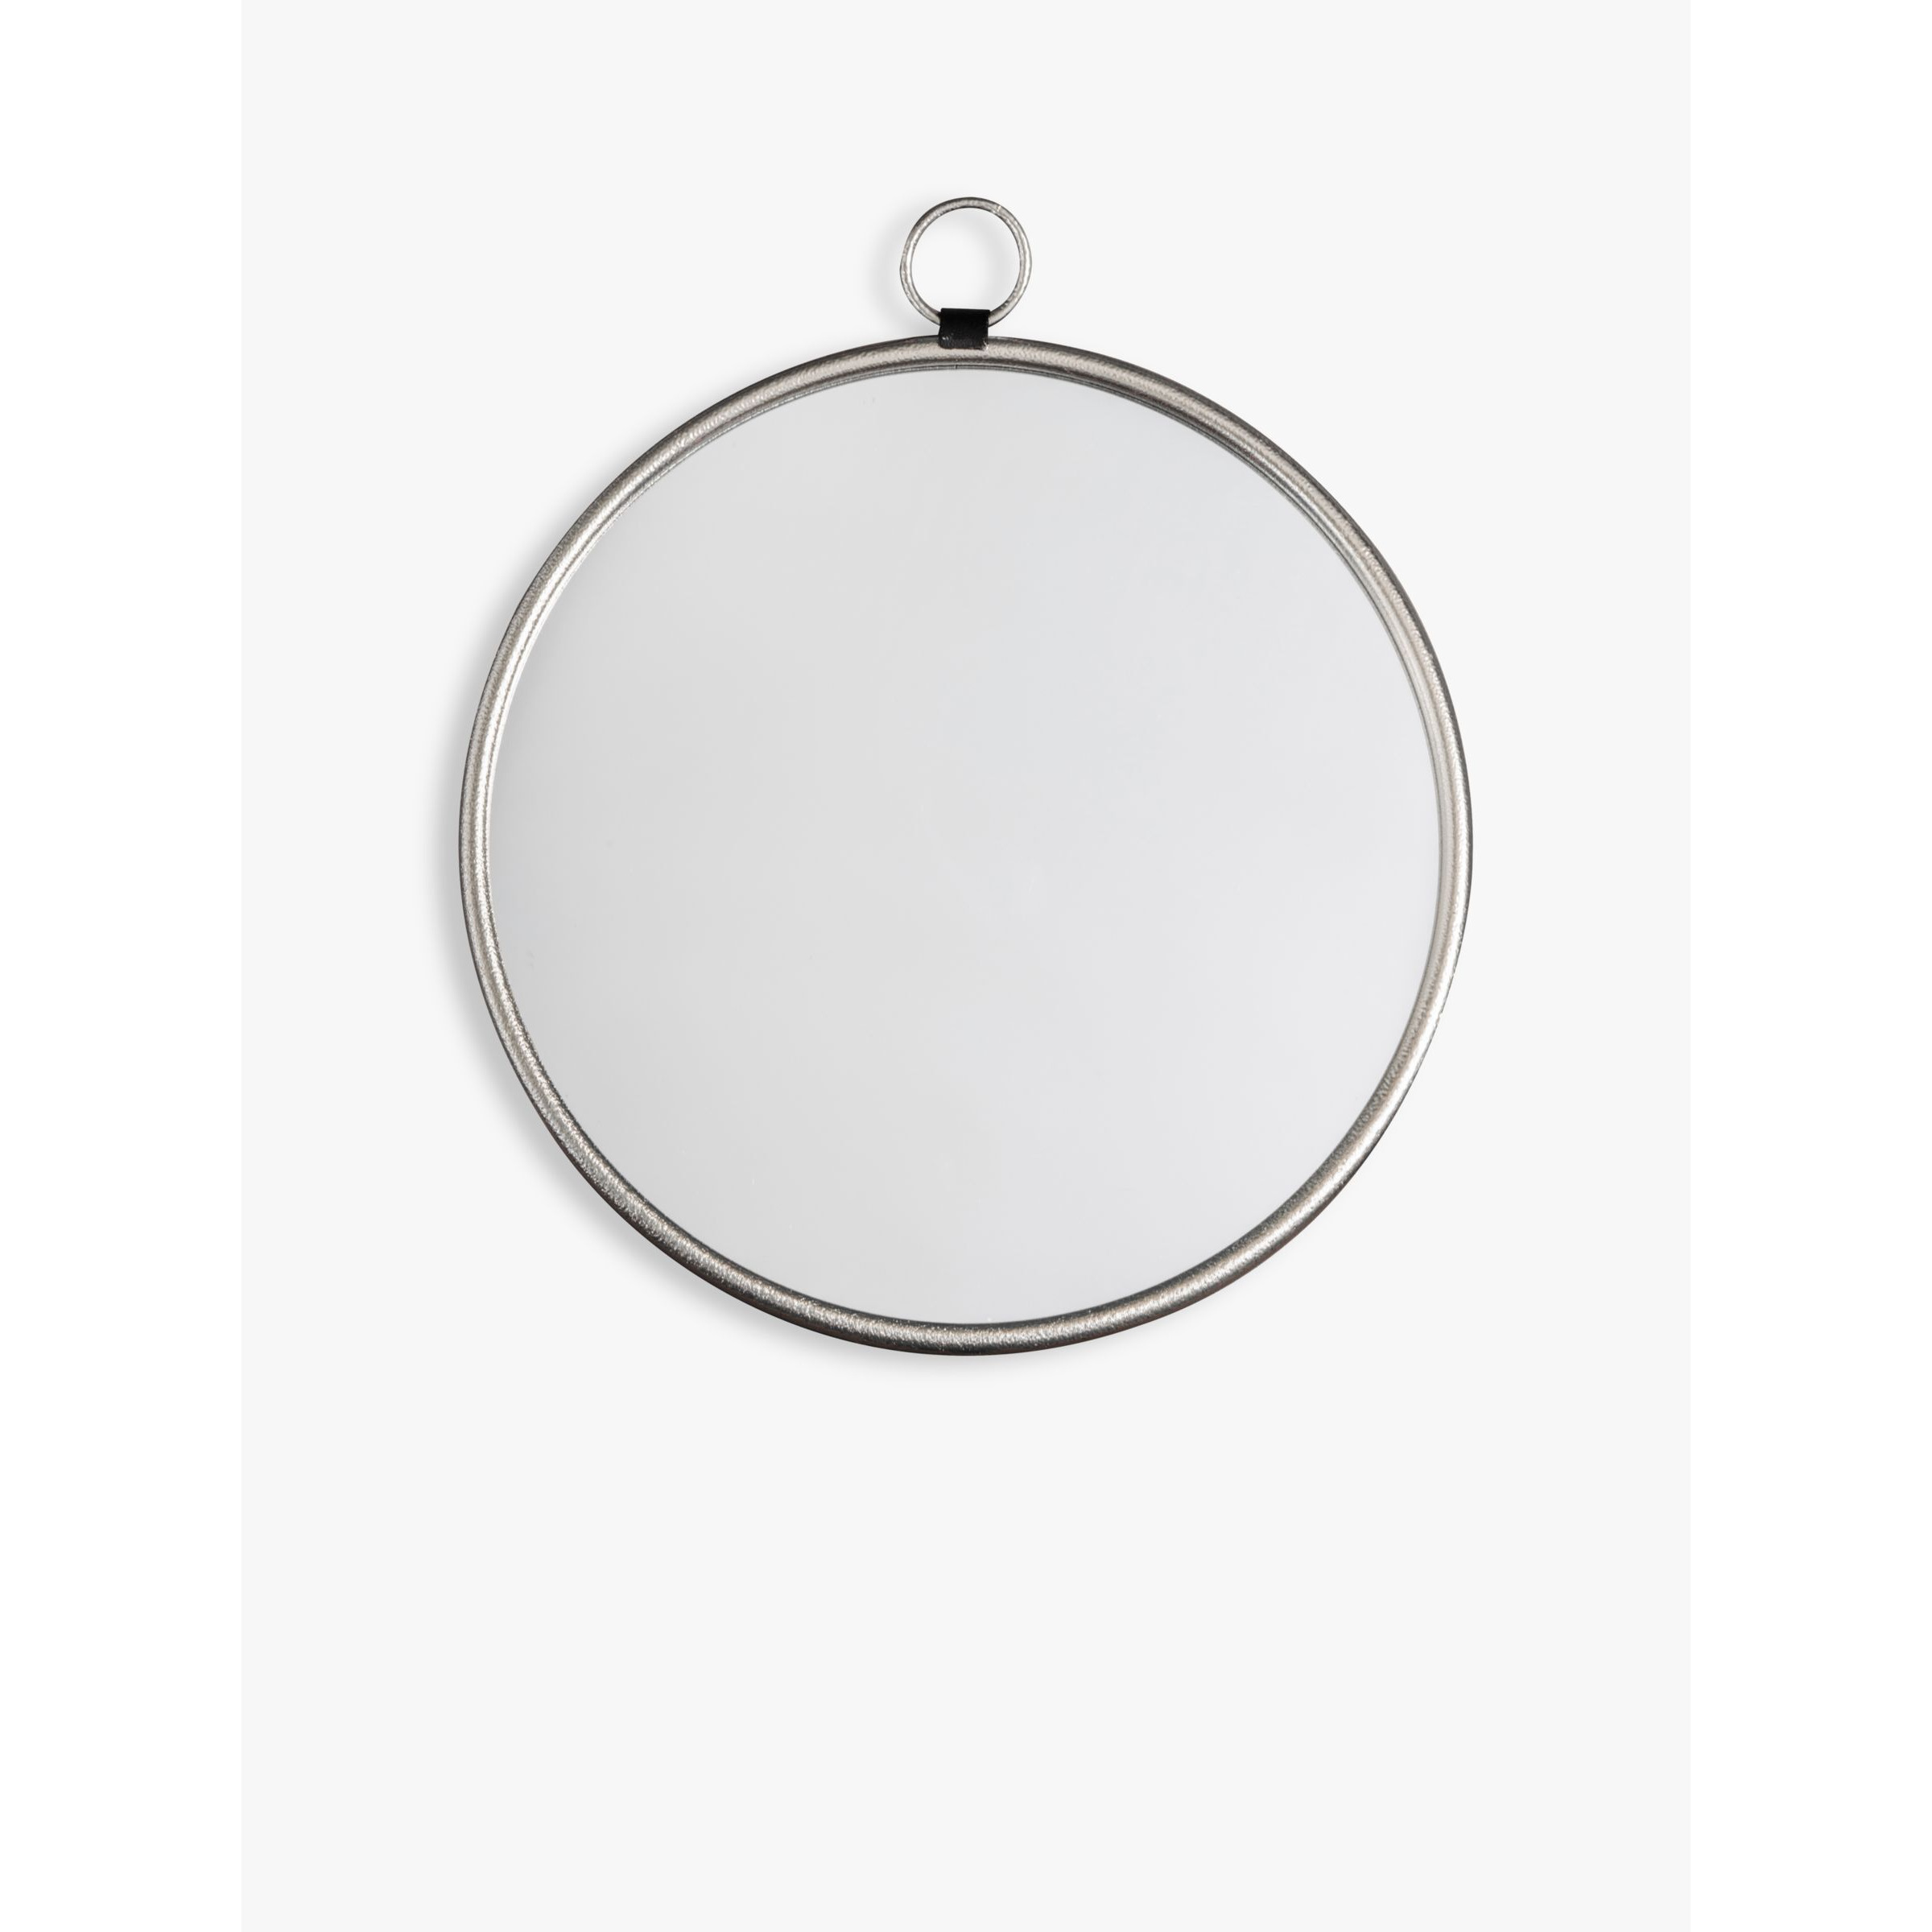 Bayswater Round Metal Frame Wall Mirror, 61cm, Silver - image 1